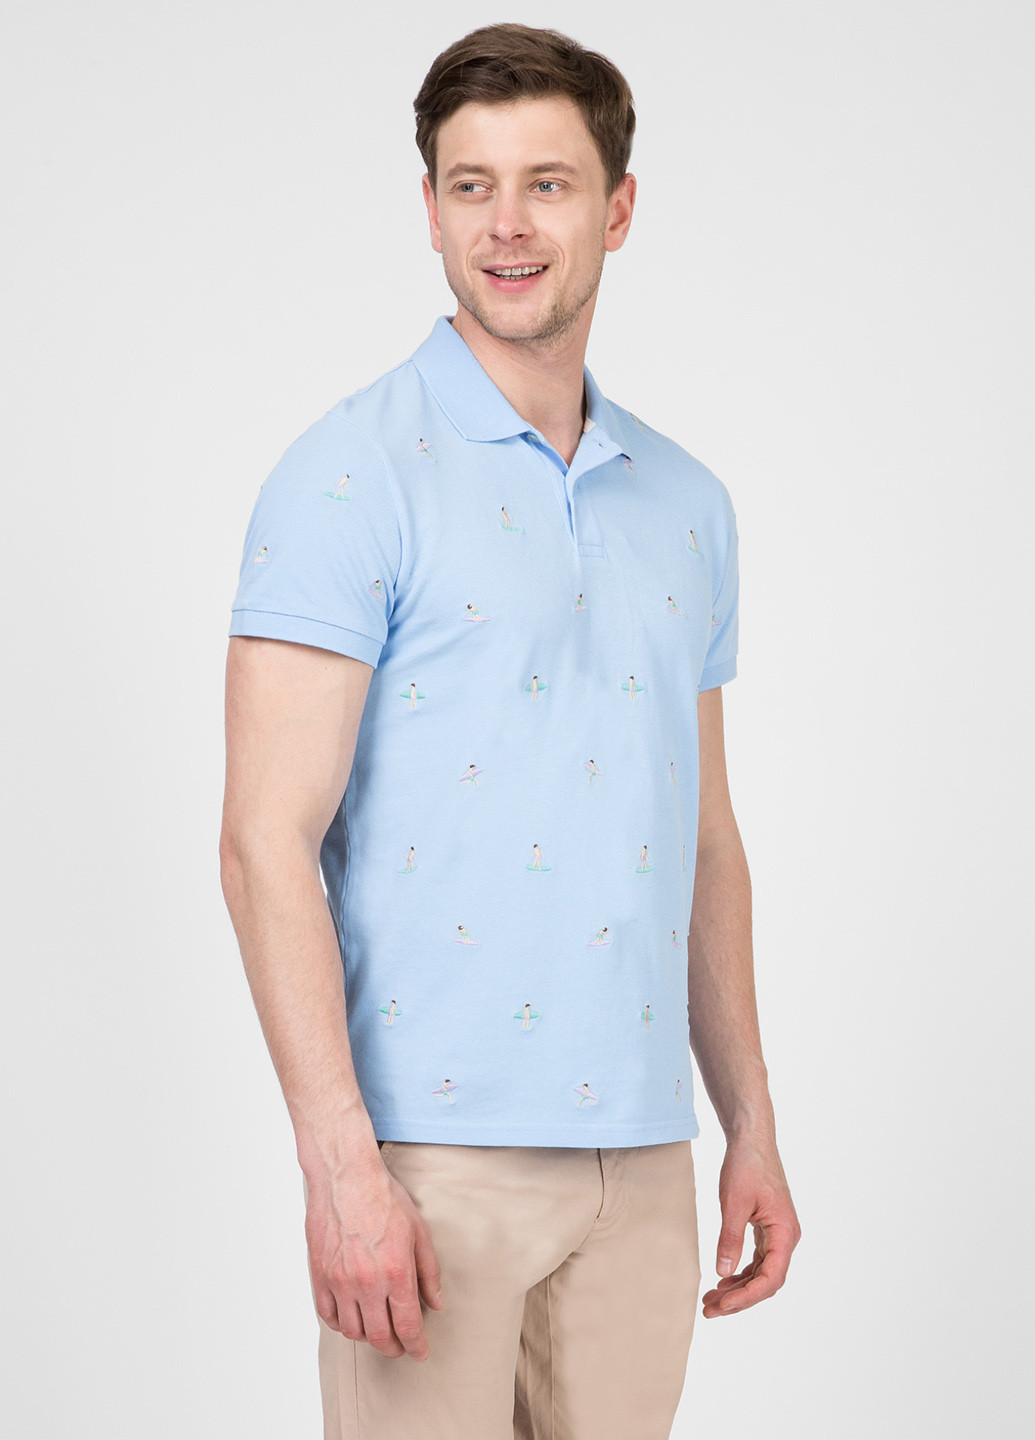 Голубой футболка-поло для мужчин Gant с рисунком